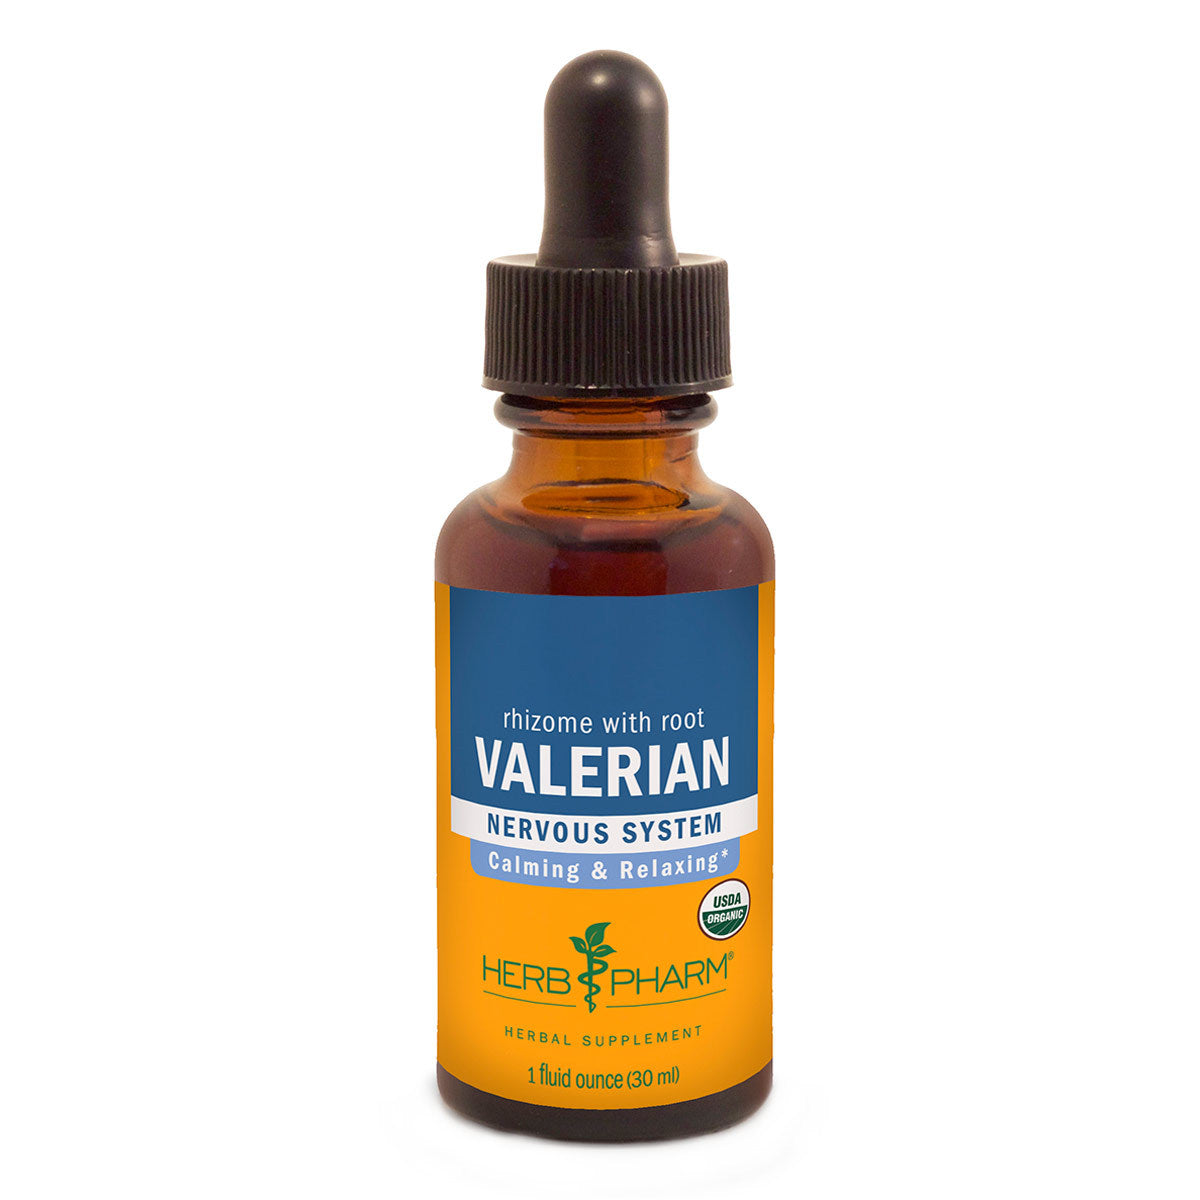 Primary image of Valerian Extract